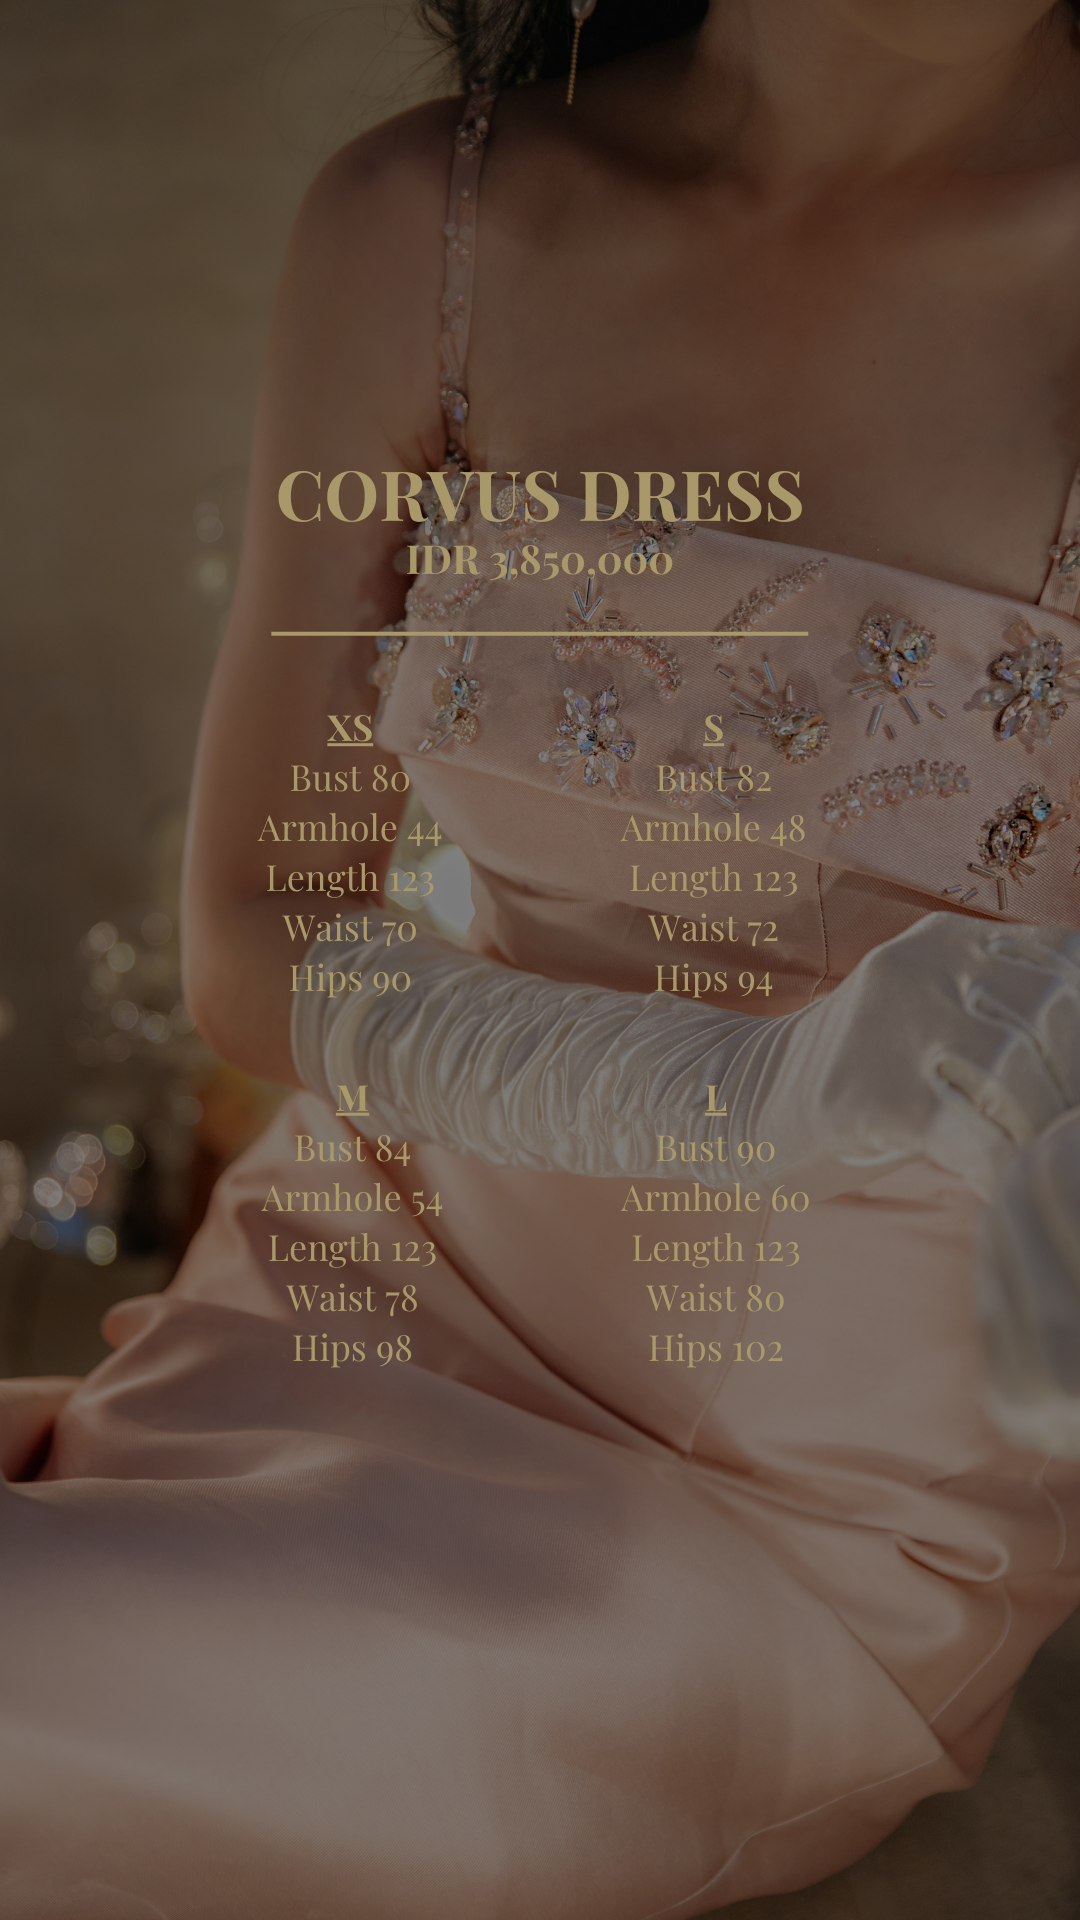 CORVUS DRESS